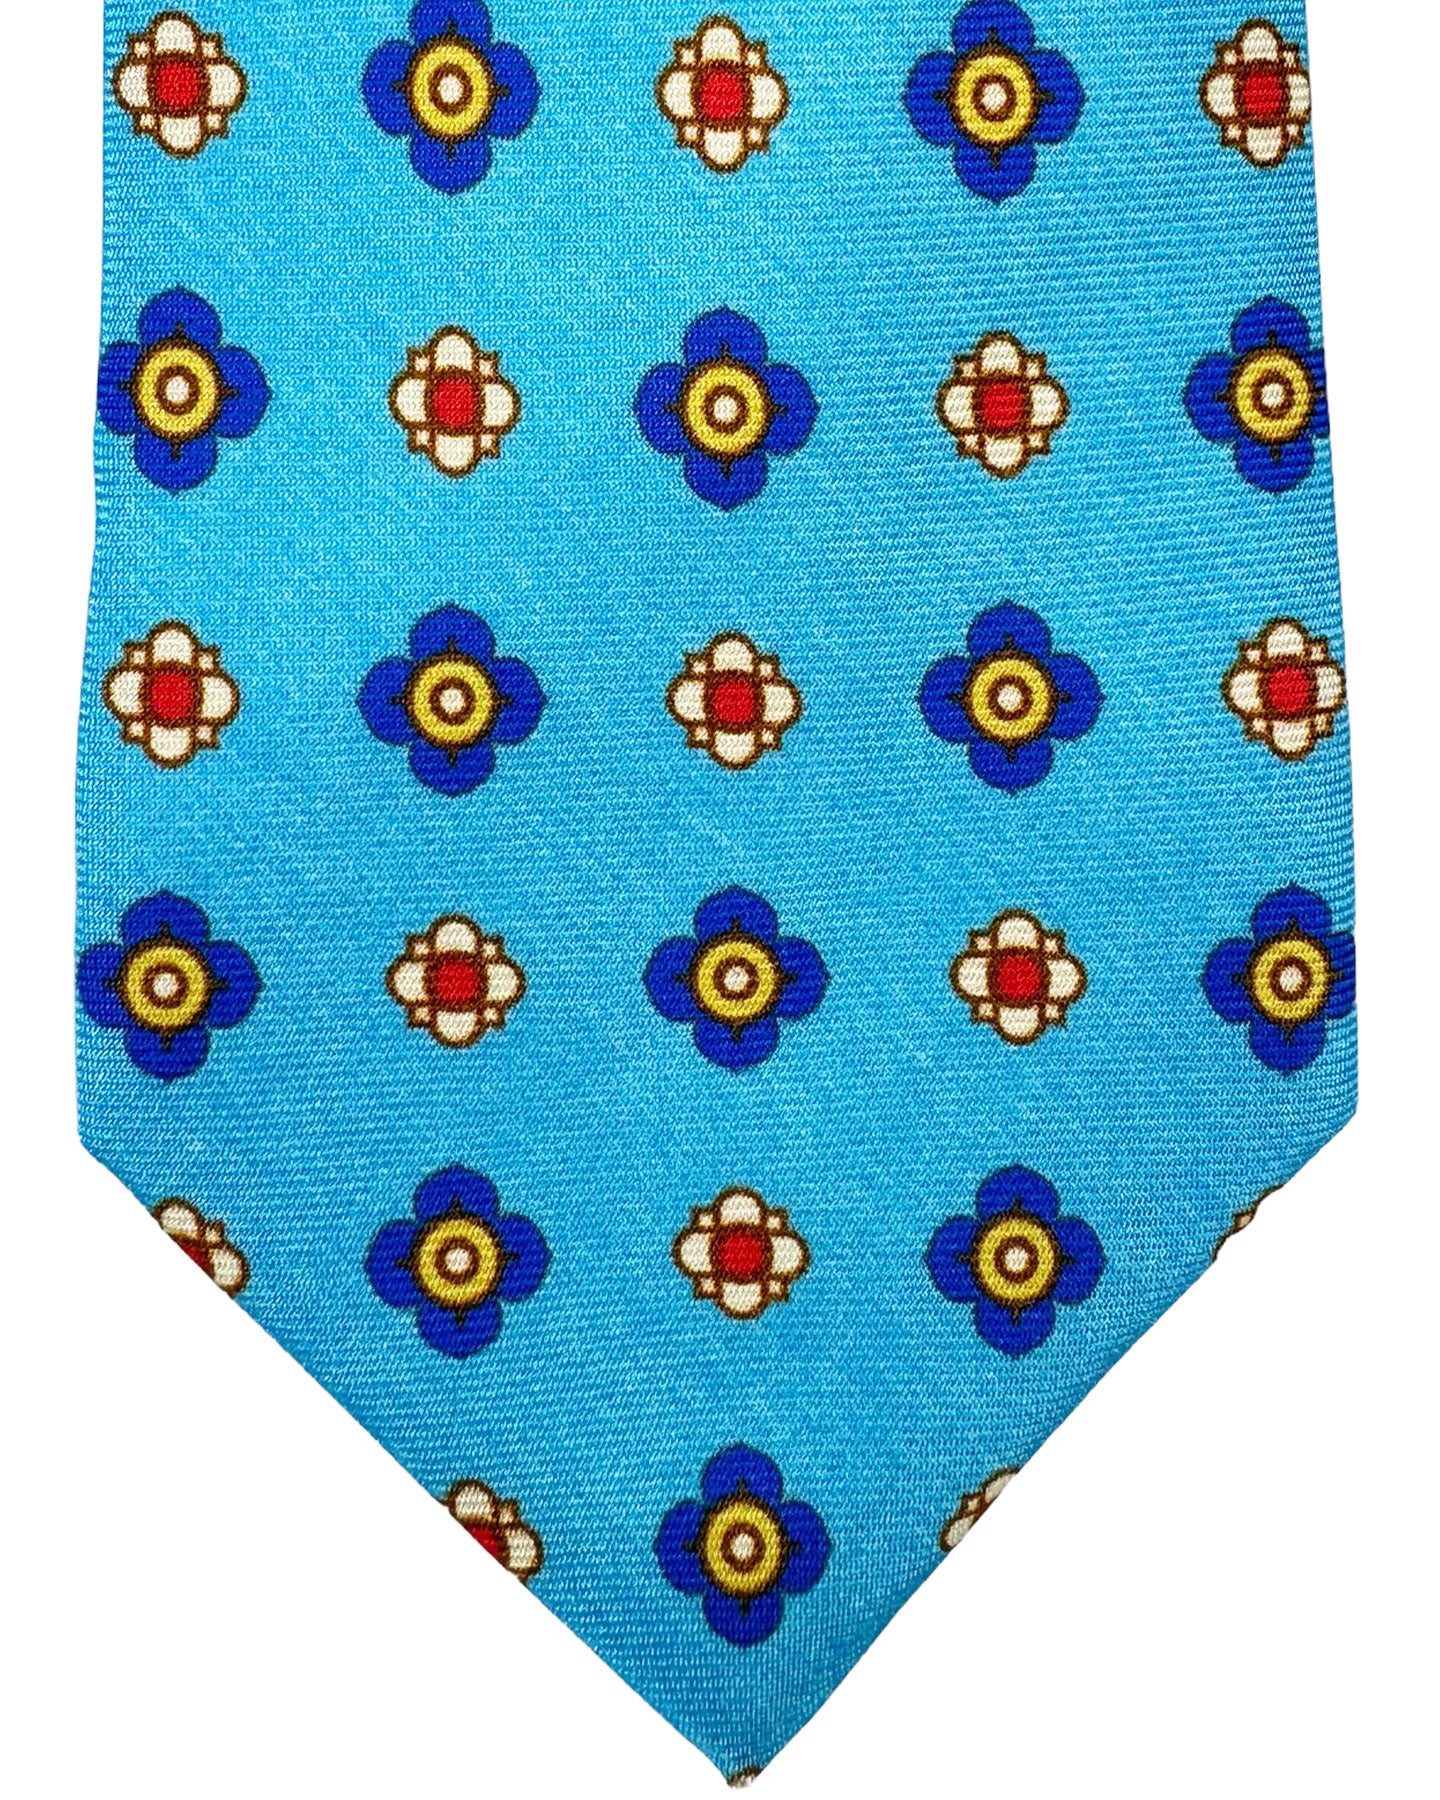 Kiton Tie Sky Blue Design - Luxury Sevenfold Necktie